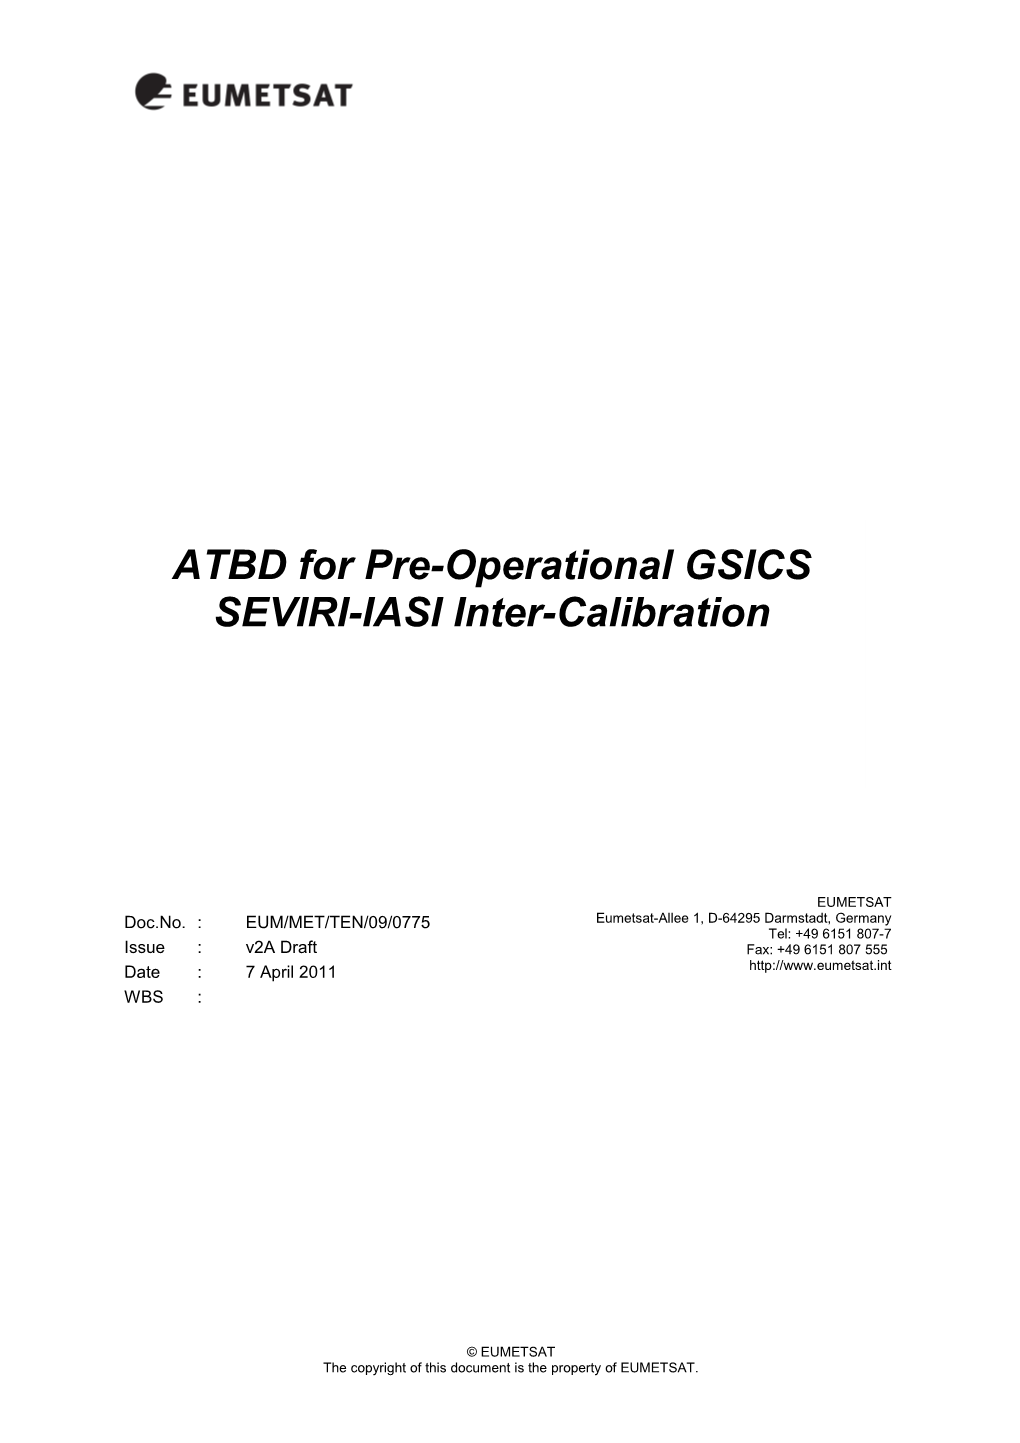 ATBD for Pre-Operational GSICS SEVIRI-IASI Inter-Calibration